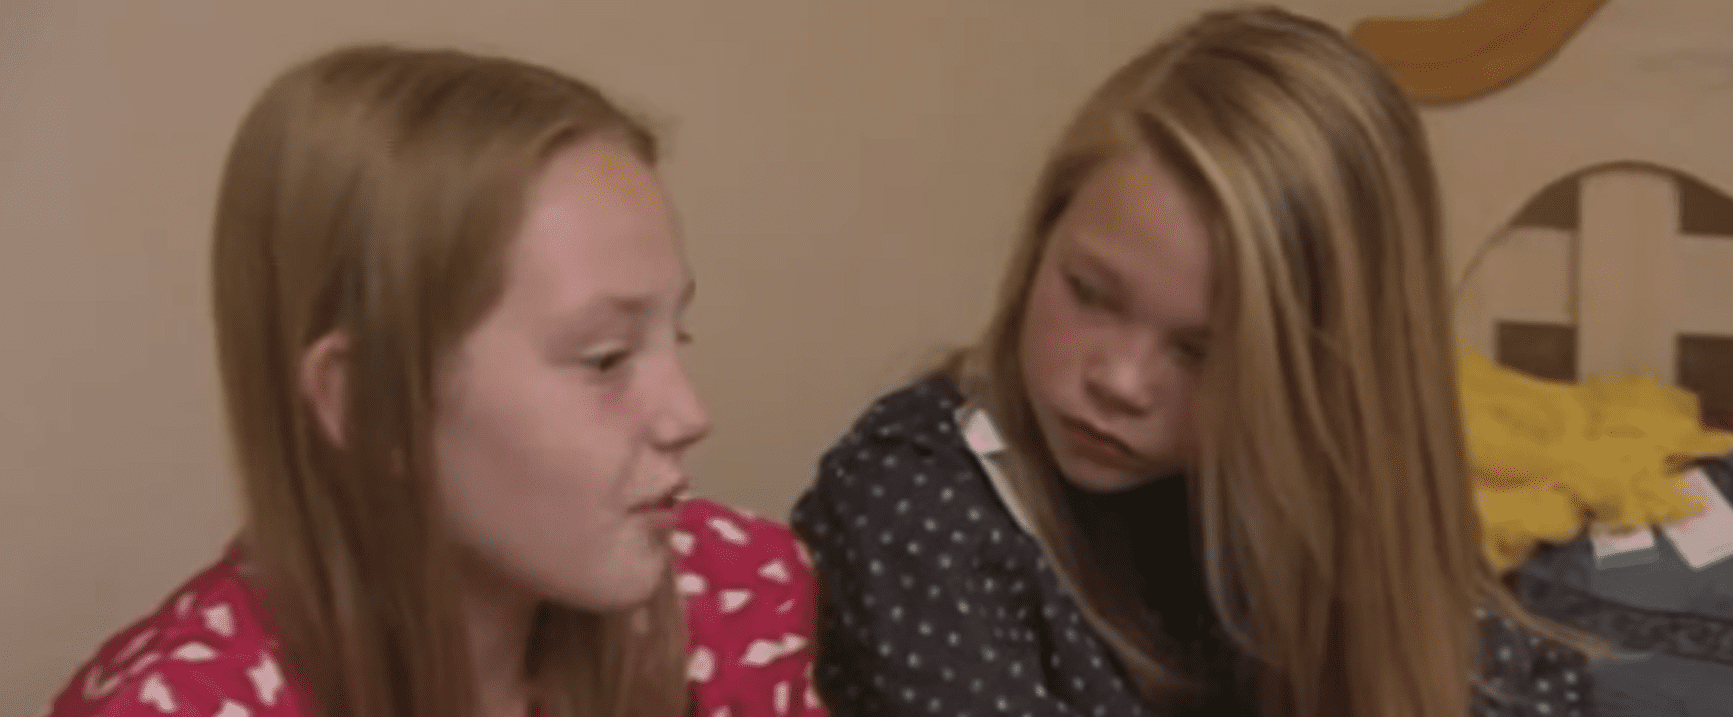 Kaylee and the girl she bullied. | Source: youtube.com/ABC News